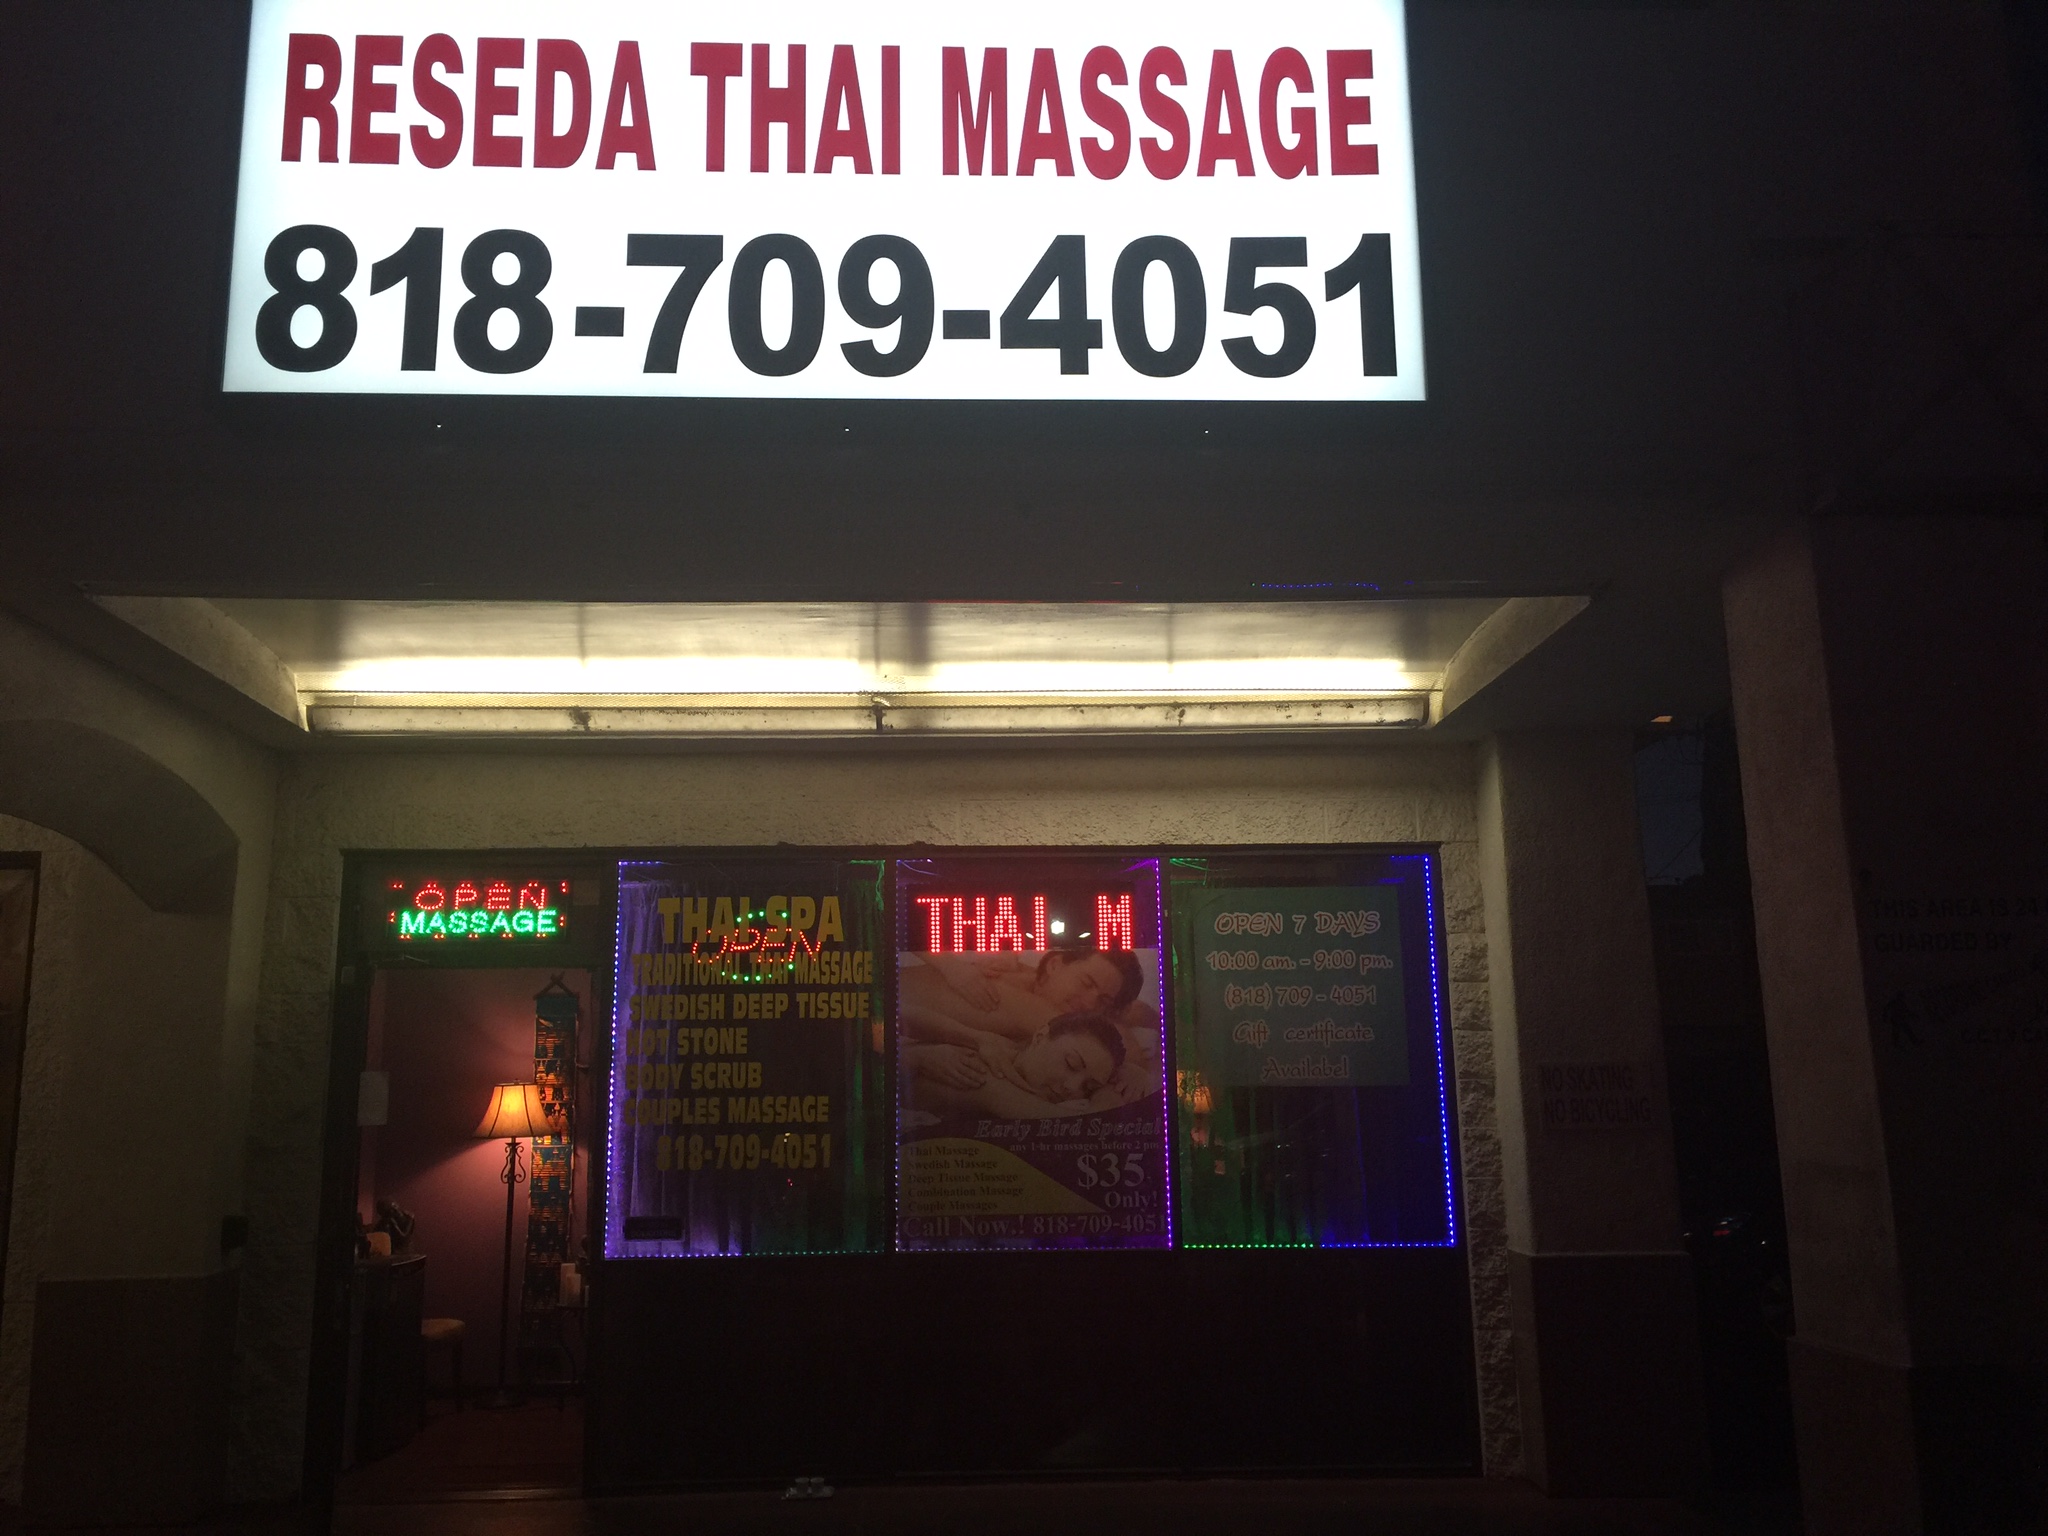 Full Body Massage in Chatsworth, CA